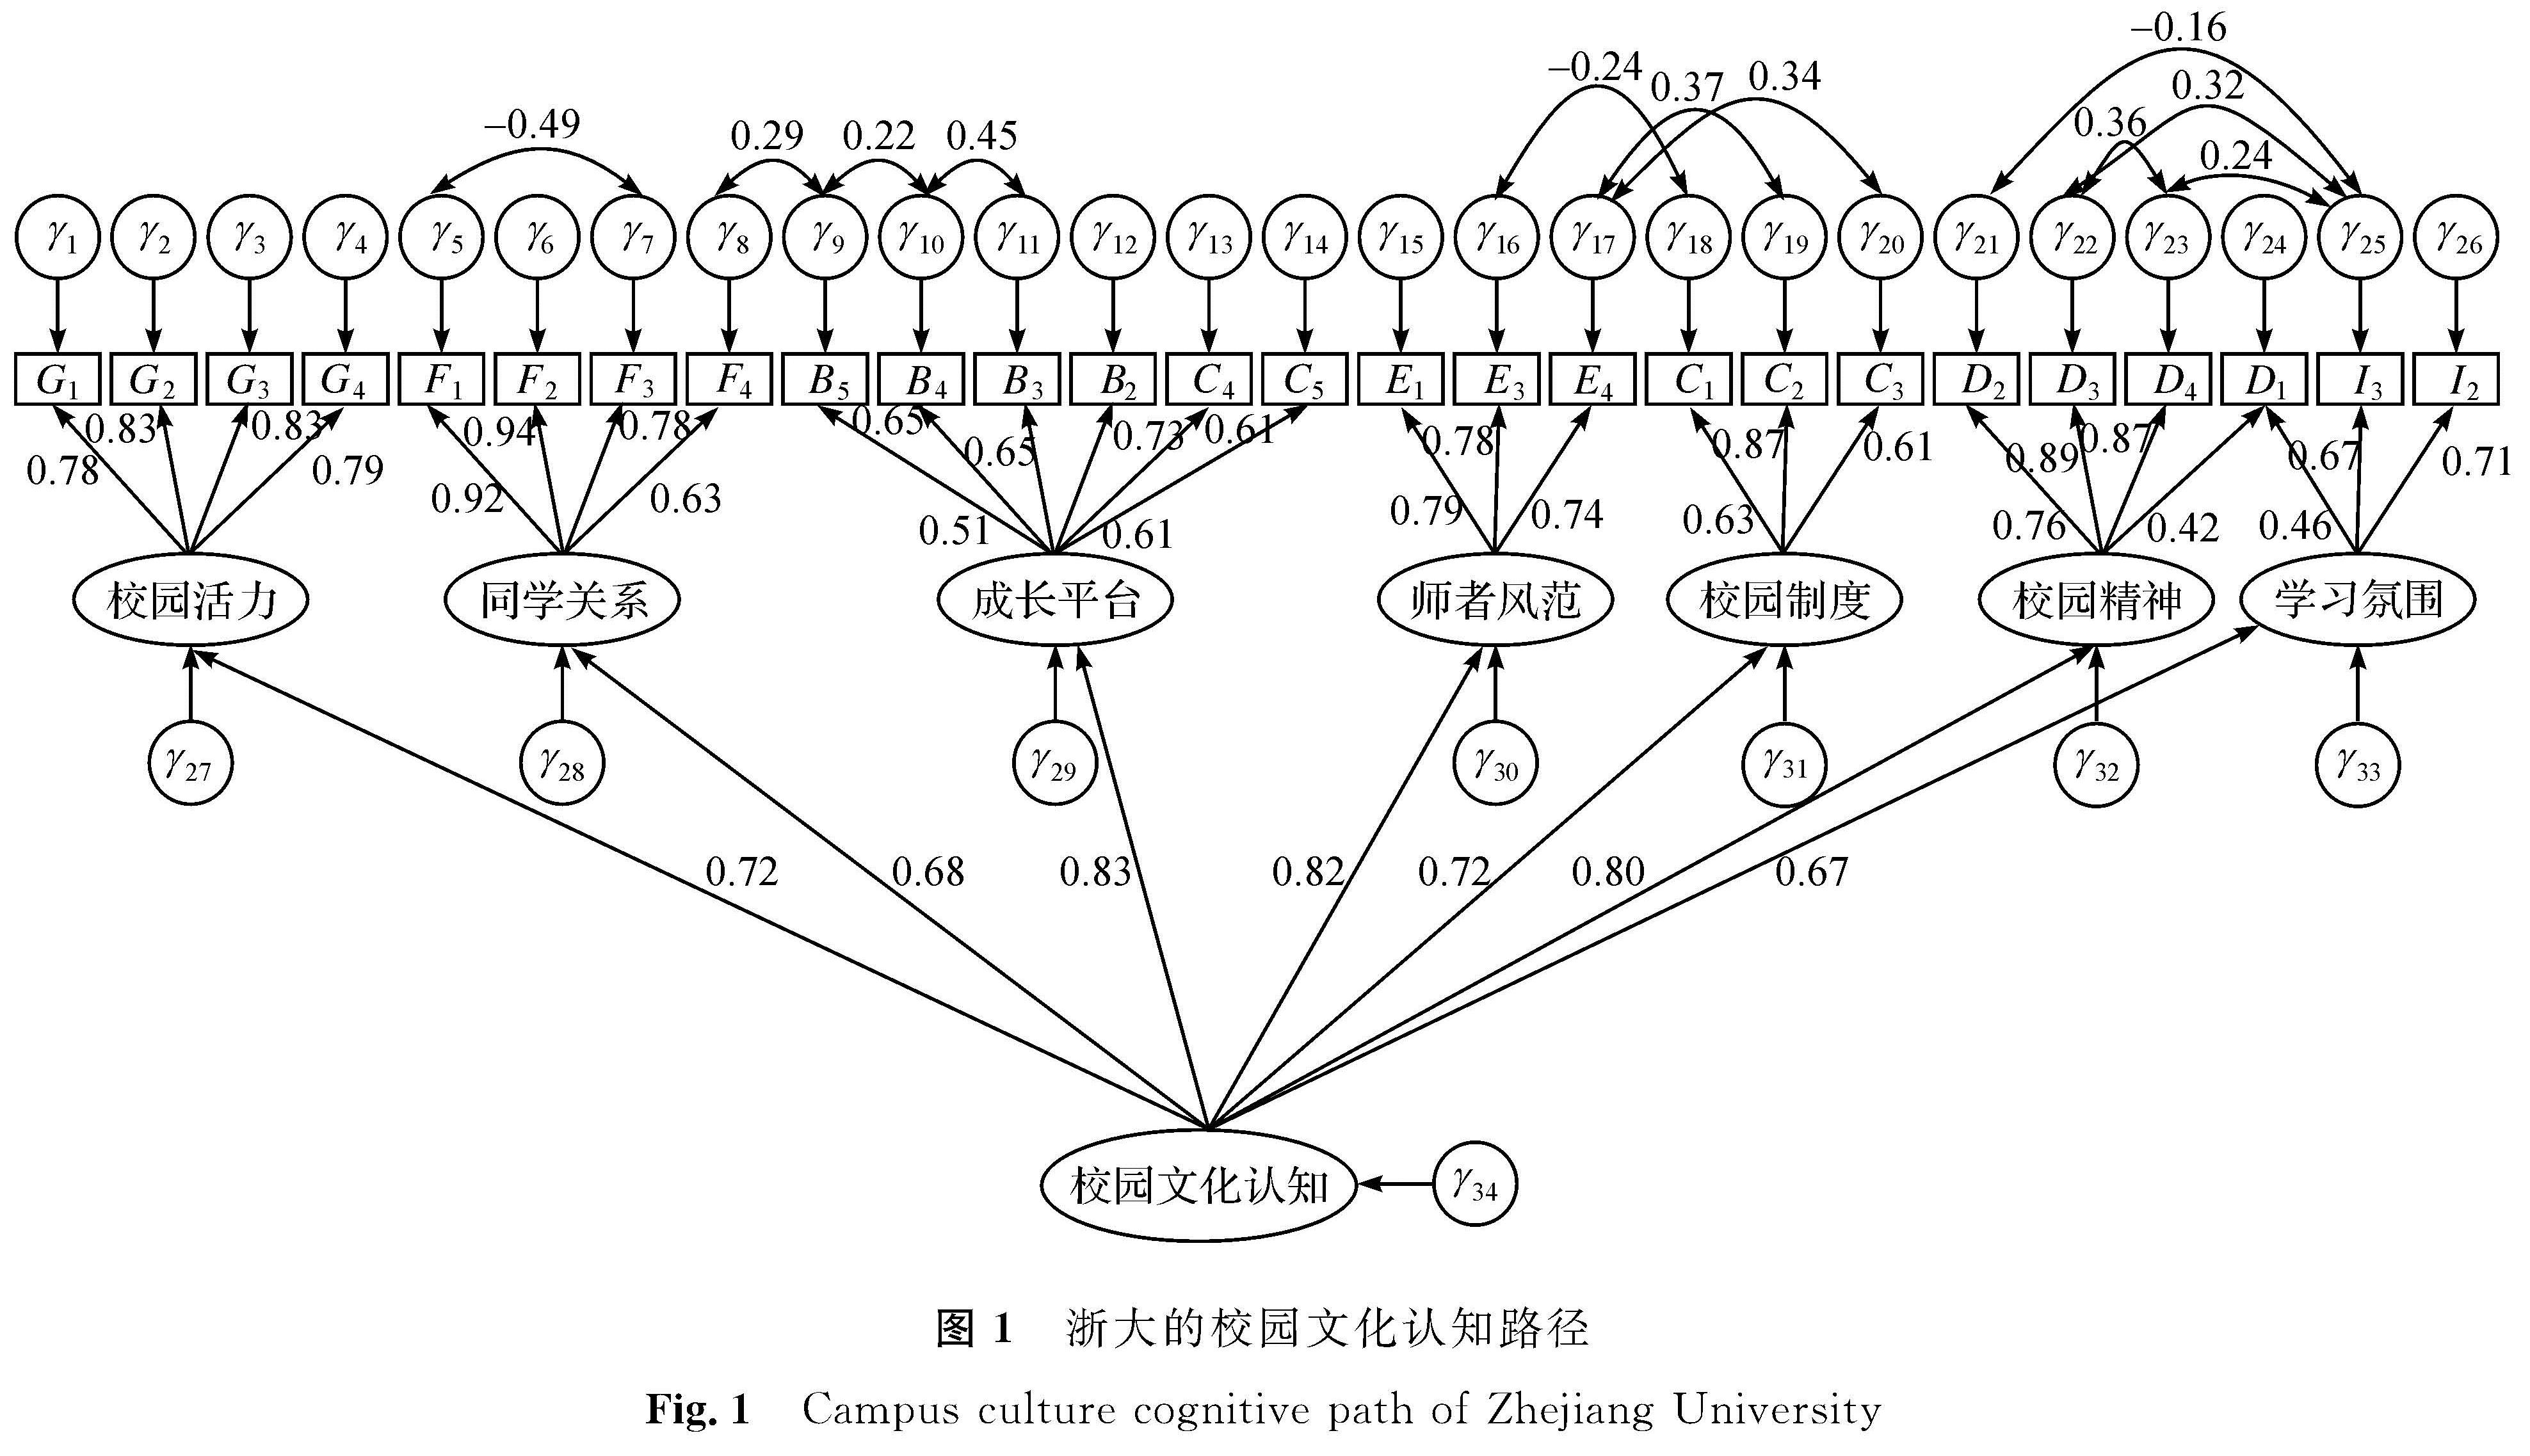 图1 浙大的校园文化认知路径<br/>Fig.1 Campus culture cognitive path of Zhejiang University